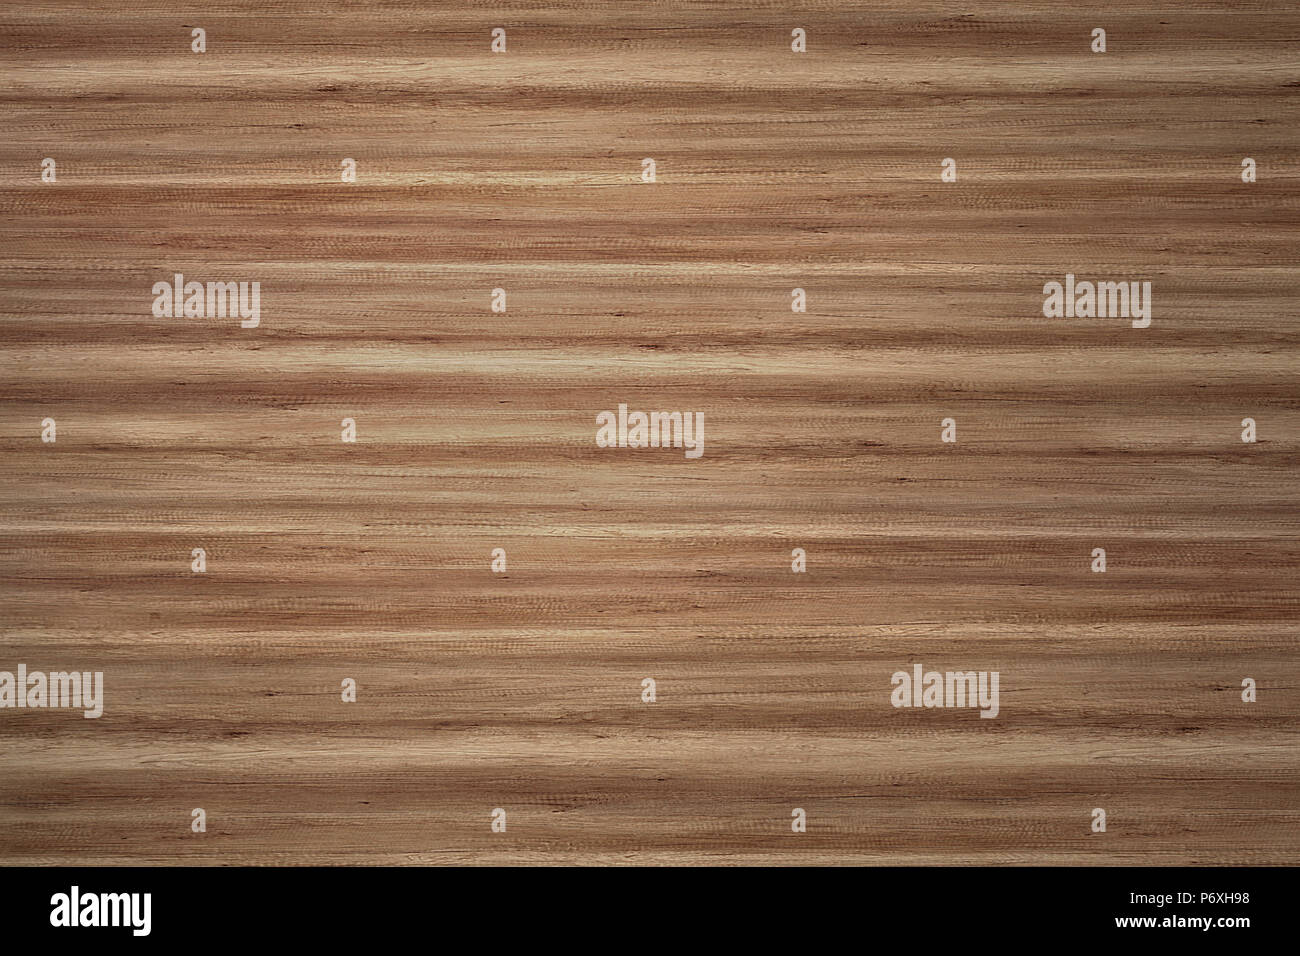 Grunge wood pattern texture background, wooden planks Stock Photo